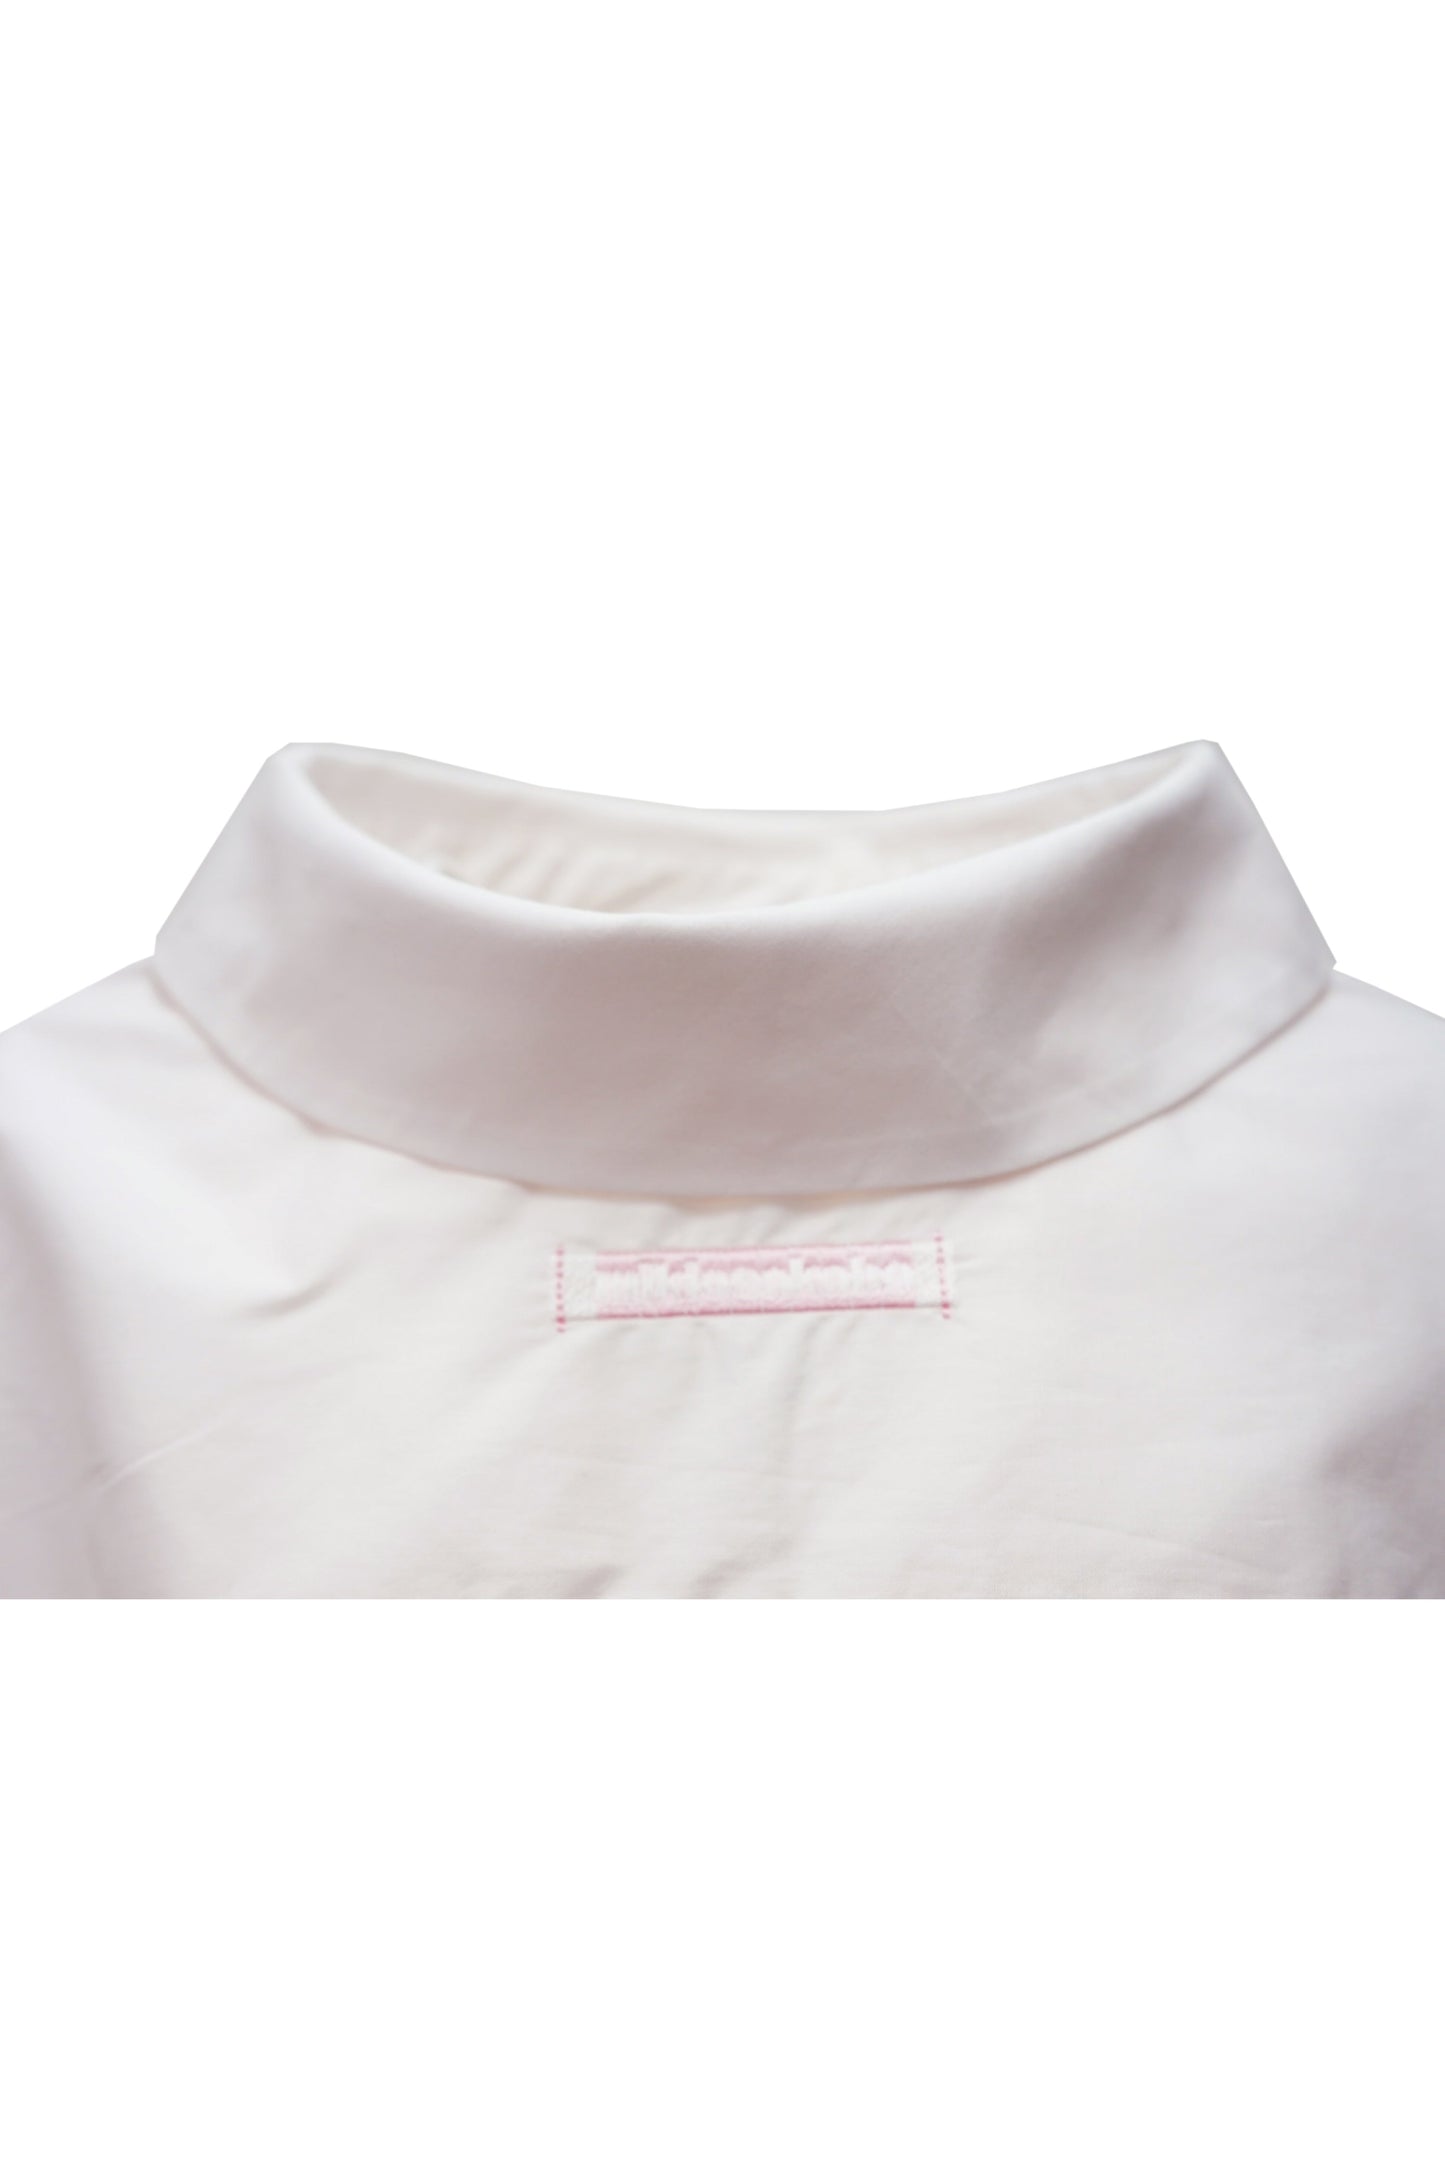 Backstyle Shirt / Pink Logo